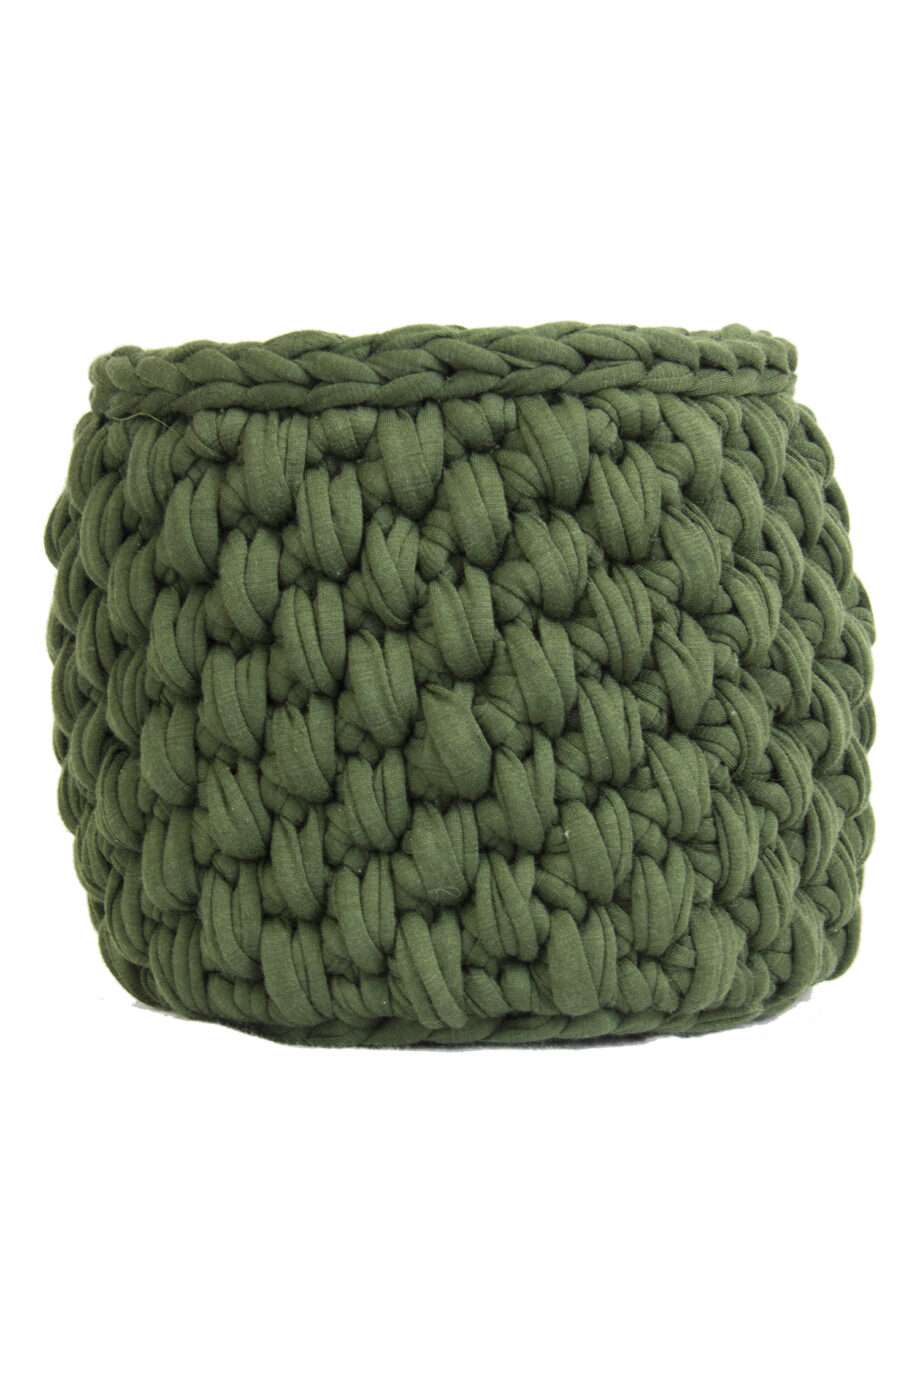 peony hunter green crochet cotton basket small